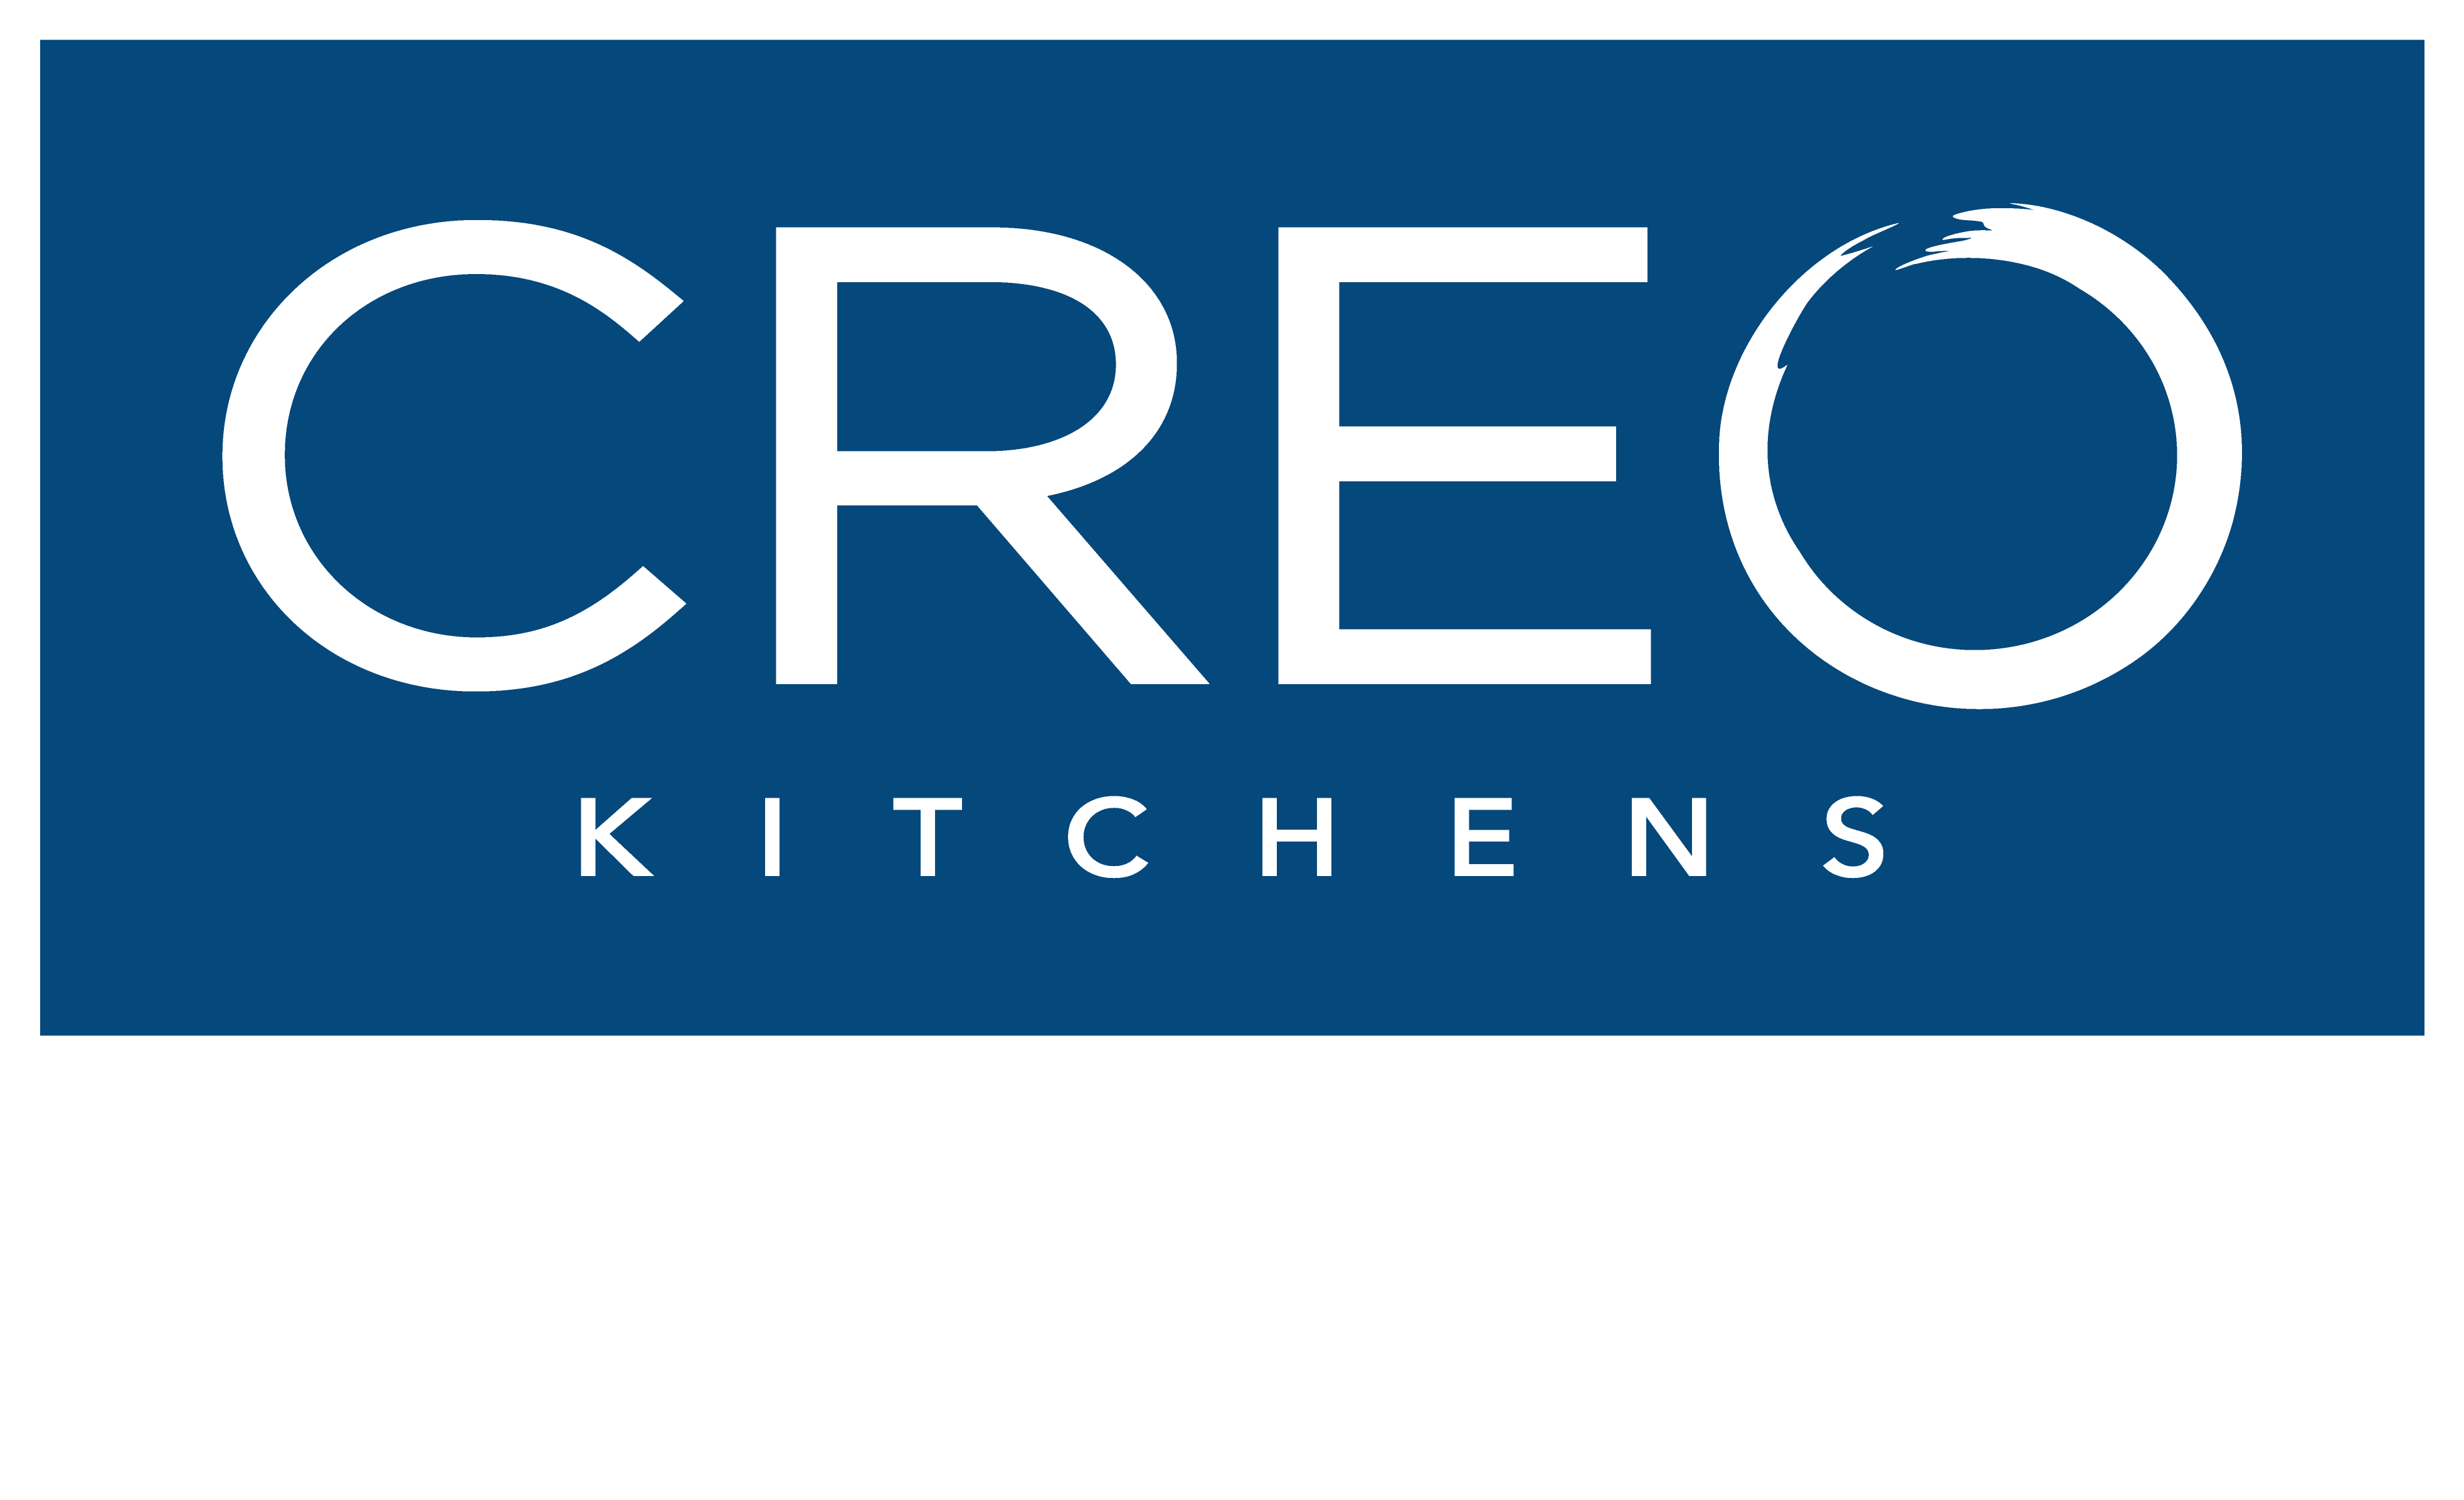 Creo Store Carini